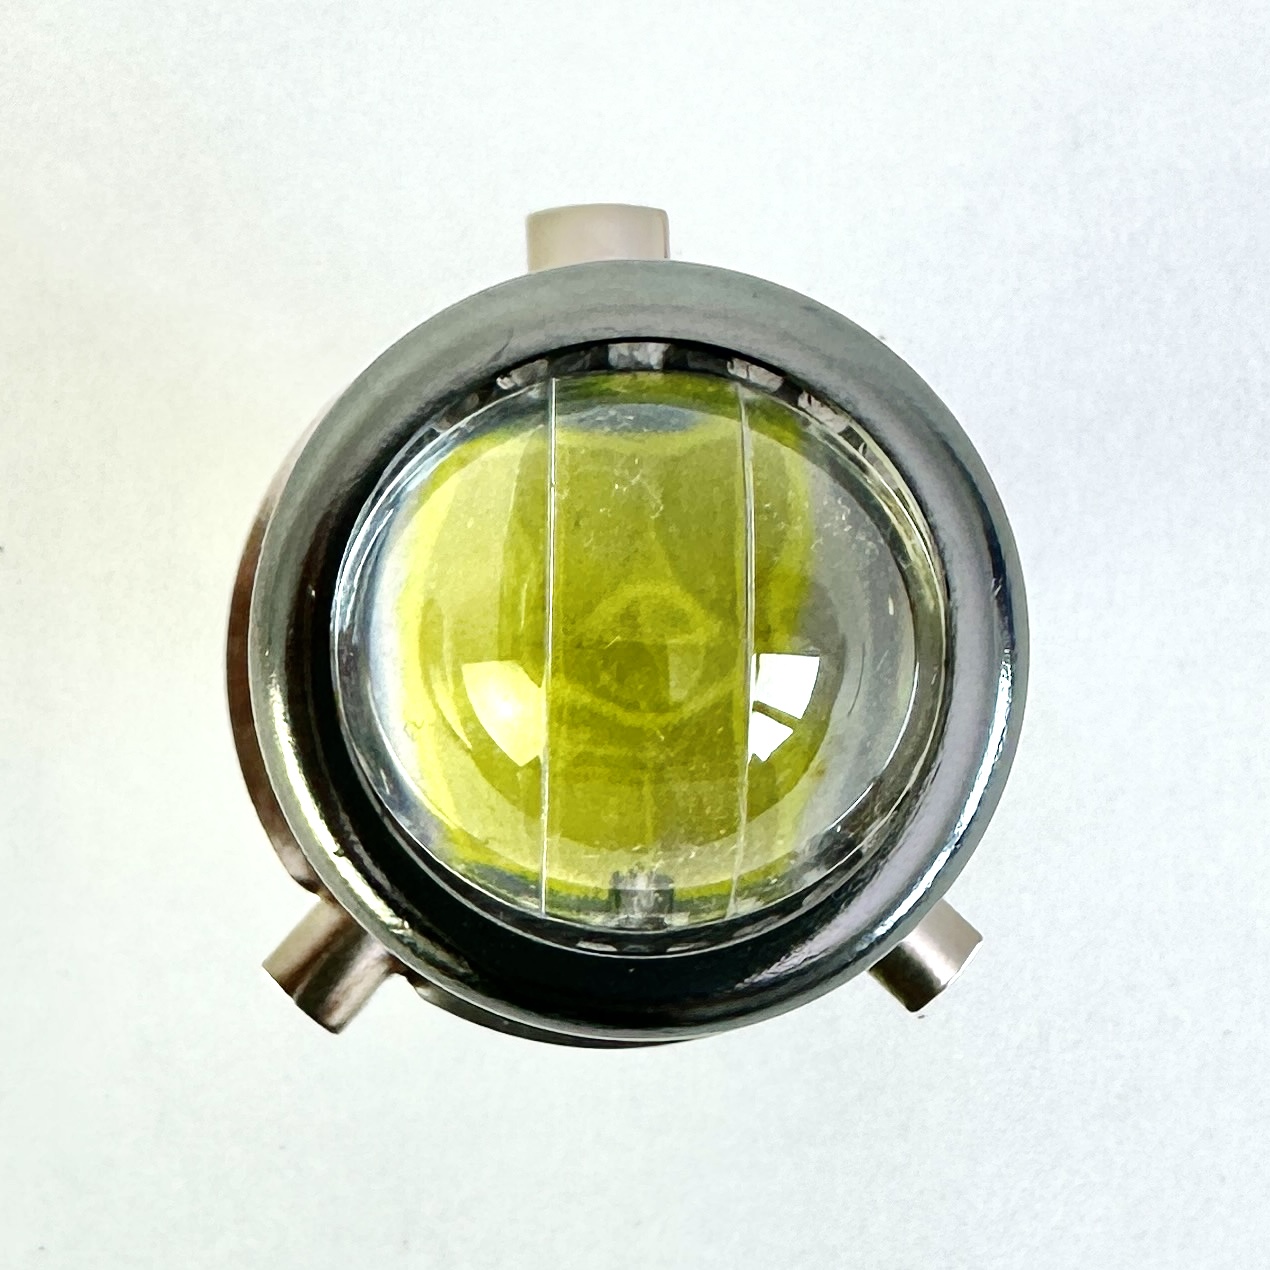 H4 LED headlight bulb 12V for e-bikes and motorbikes